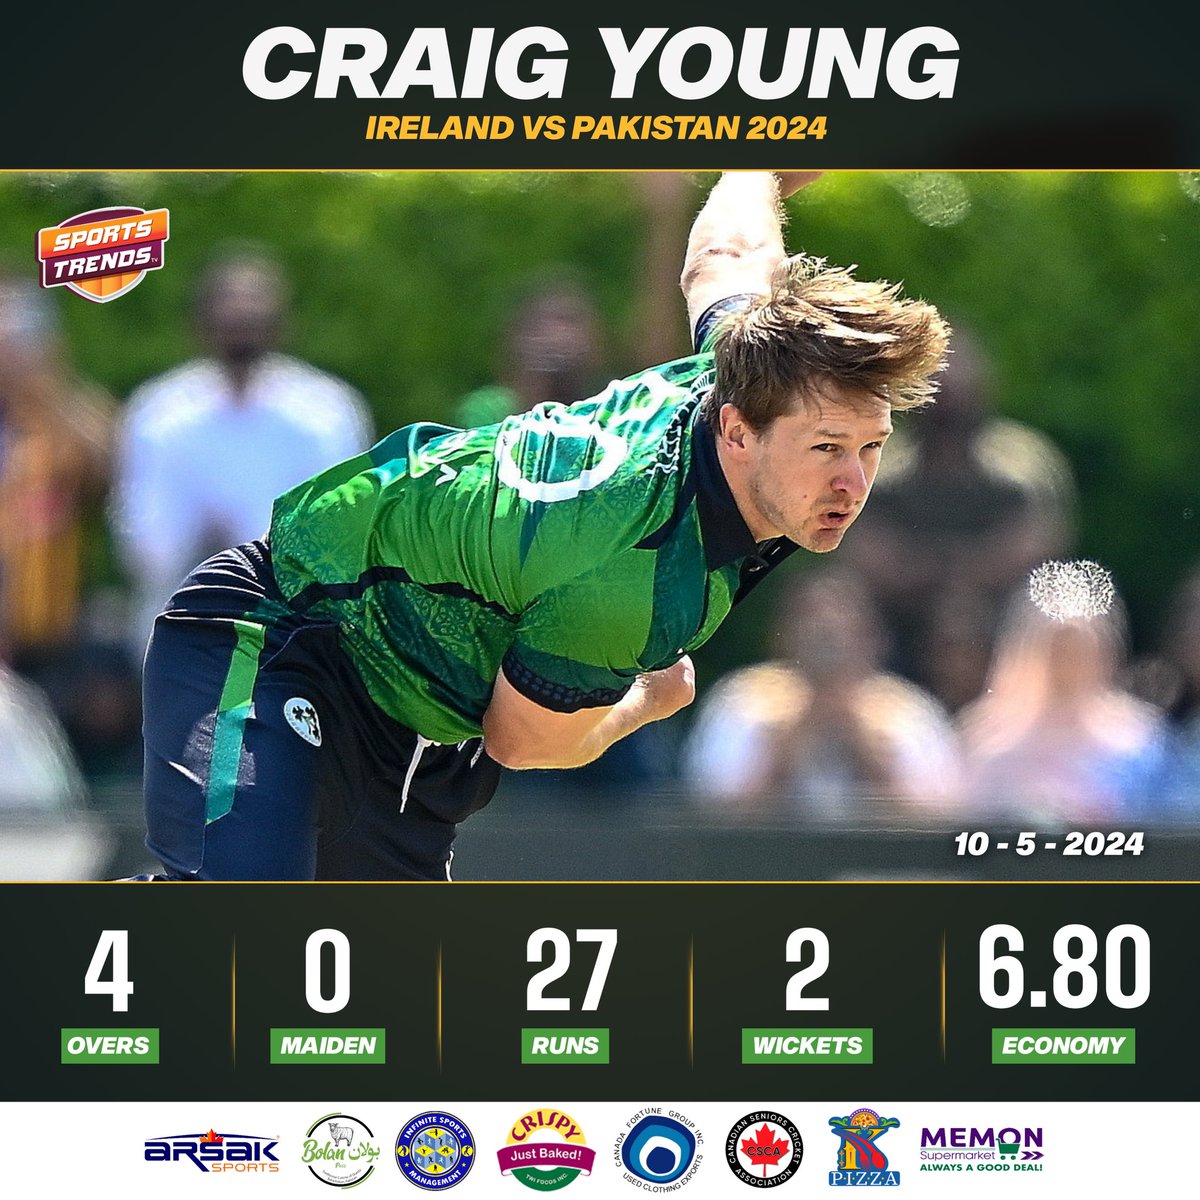 Good Bowling Figures For Craig Young Against Pakistan in First T20 International Match 🔥 #Cricket #Pakistan #PakistanCricket #IREvPAK #PAKvIRE #IREvsPAK #PAKvsIRE #BabarAzam #SaimAyub #SportsTrendsCan #SportsTrendsCanada